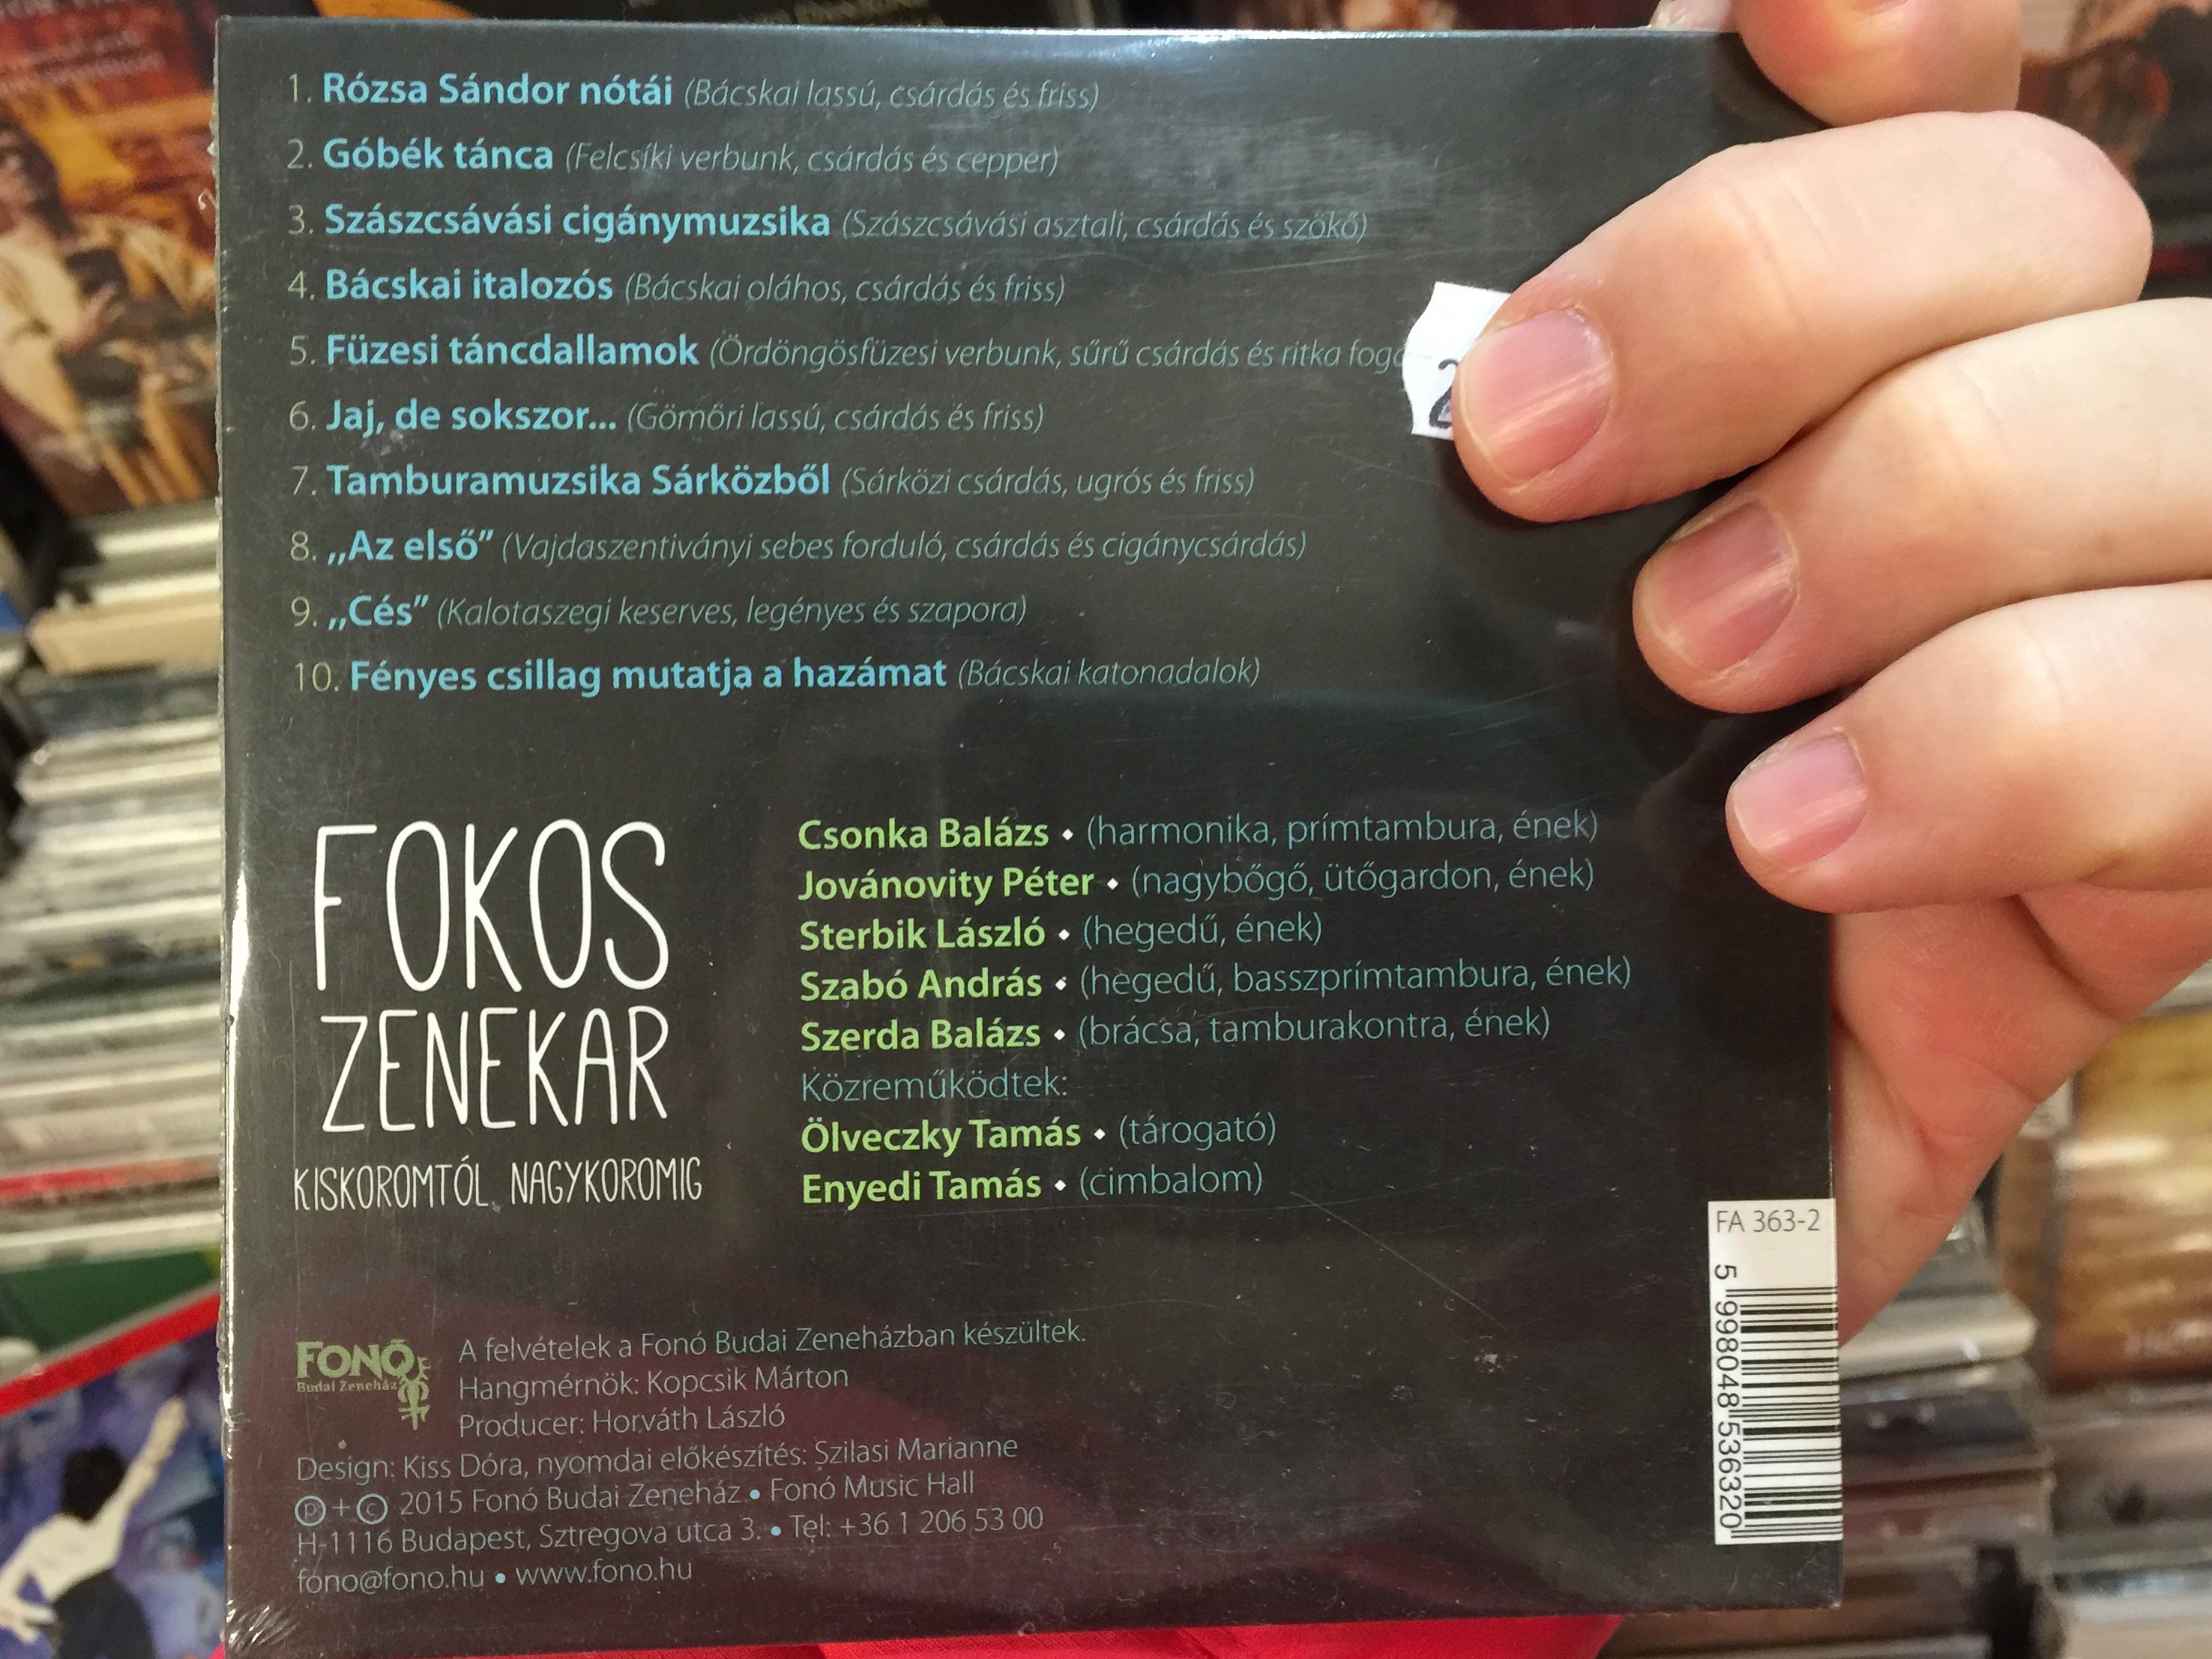 fokos-zenekar-kiskoromt-l-nagykoromig-fon-records-audio-cd-2015-fa-363-2-2-.jpg